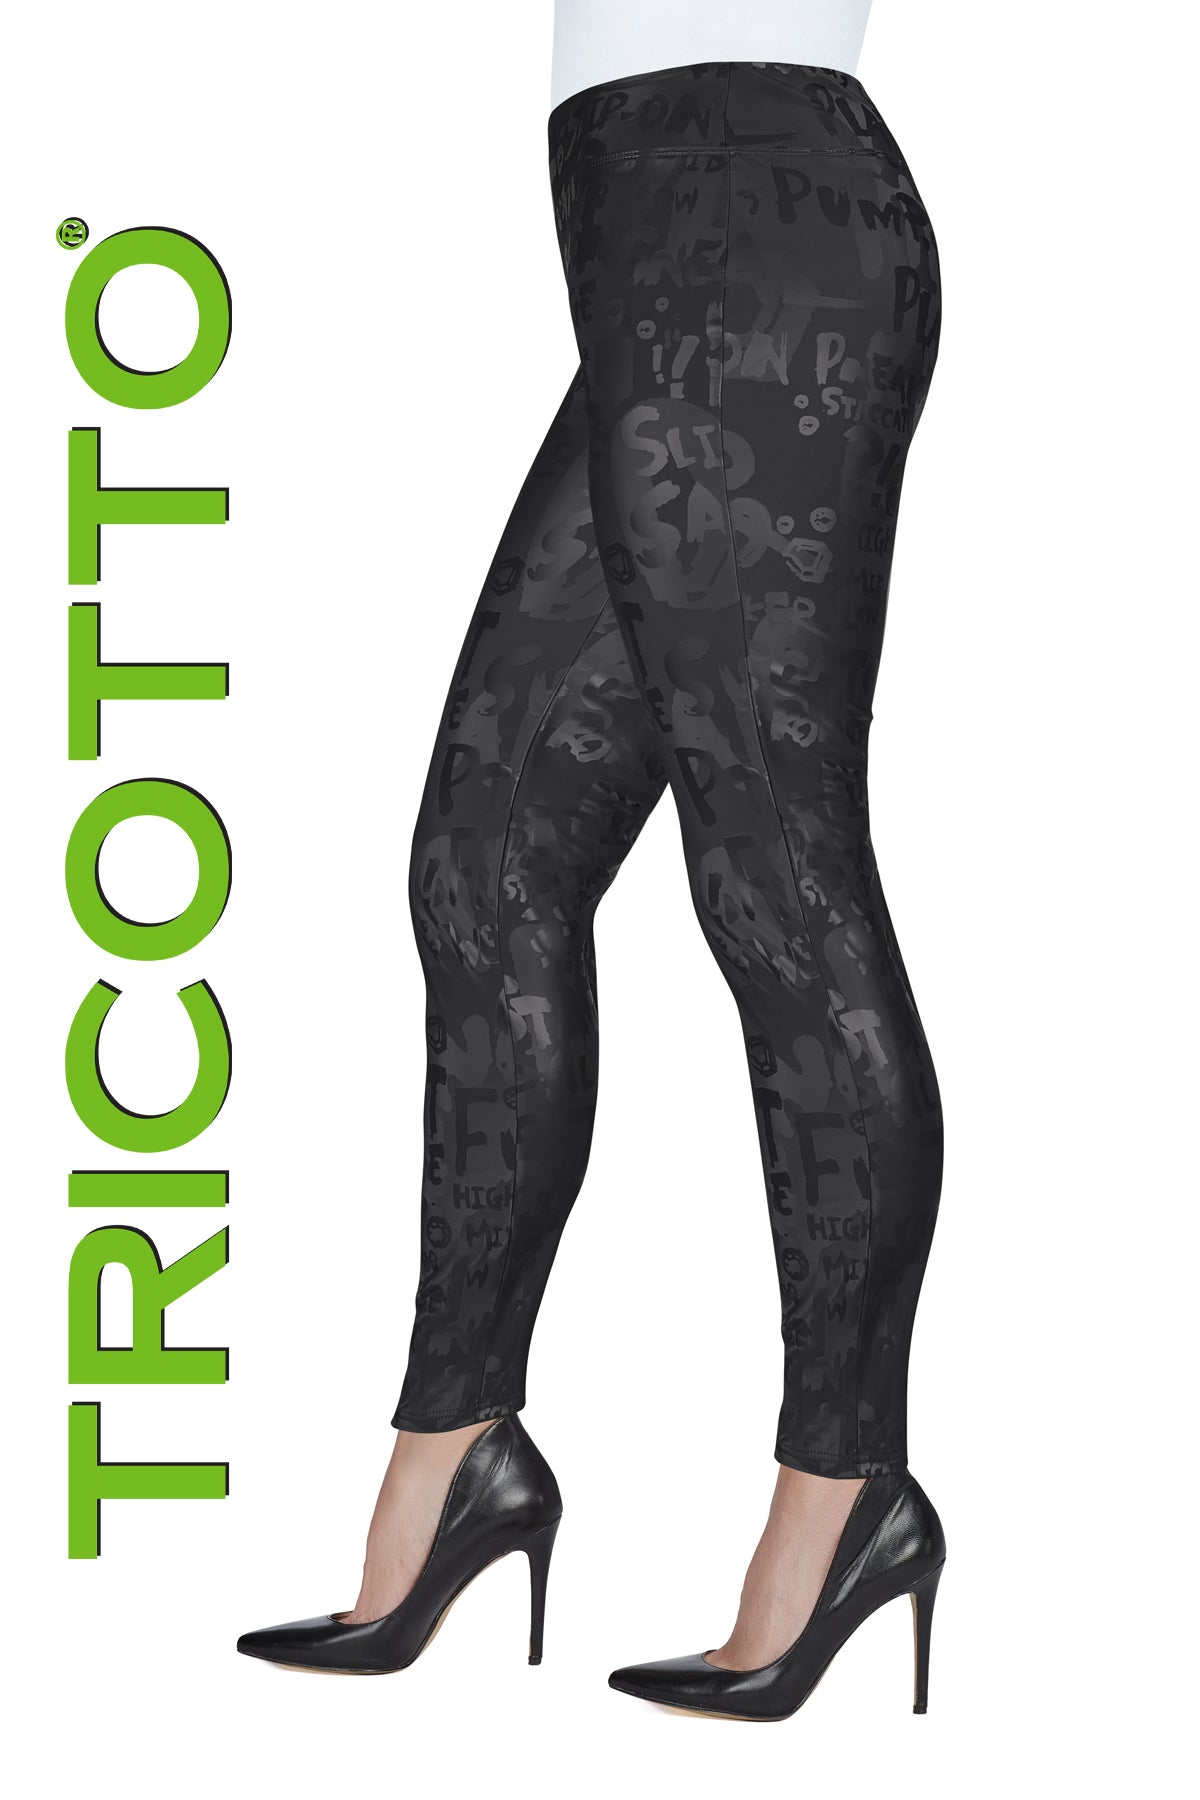 Tricotto Black Leggings-Buy Tricotto Leggings Online-Online Legging Shop-Tricotto Clothing Montreal-Tricotto Online Store